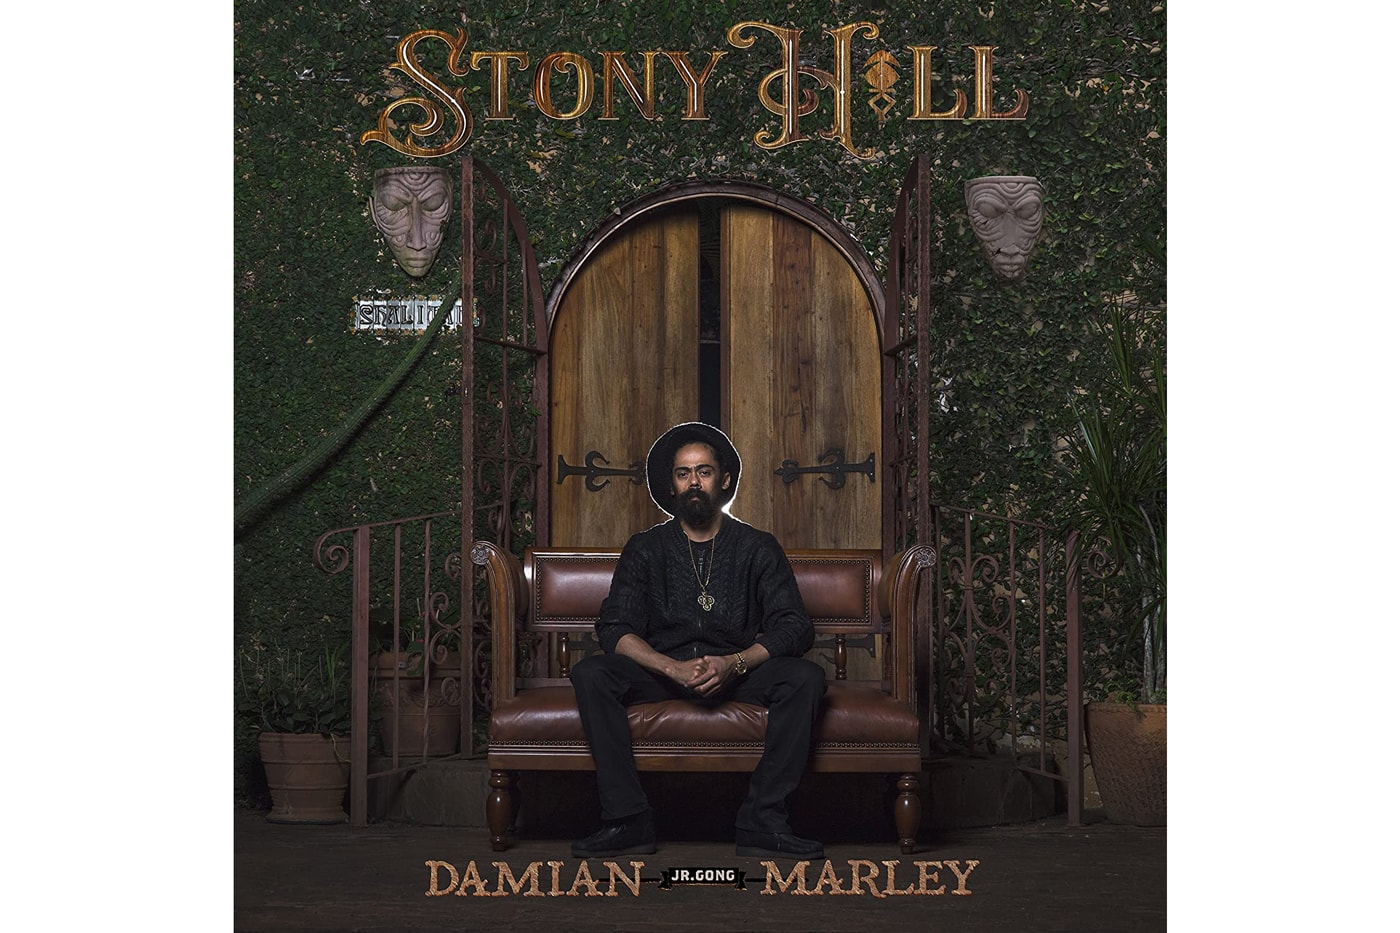 Damian Marley Stony Hill Album Stream Jr Gong Reggae LP apple music